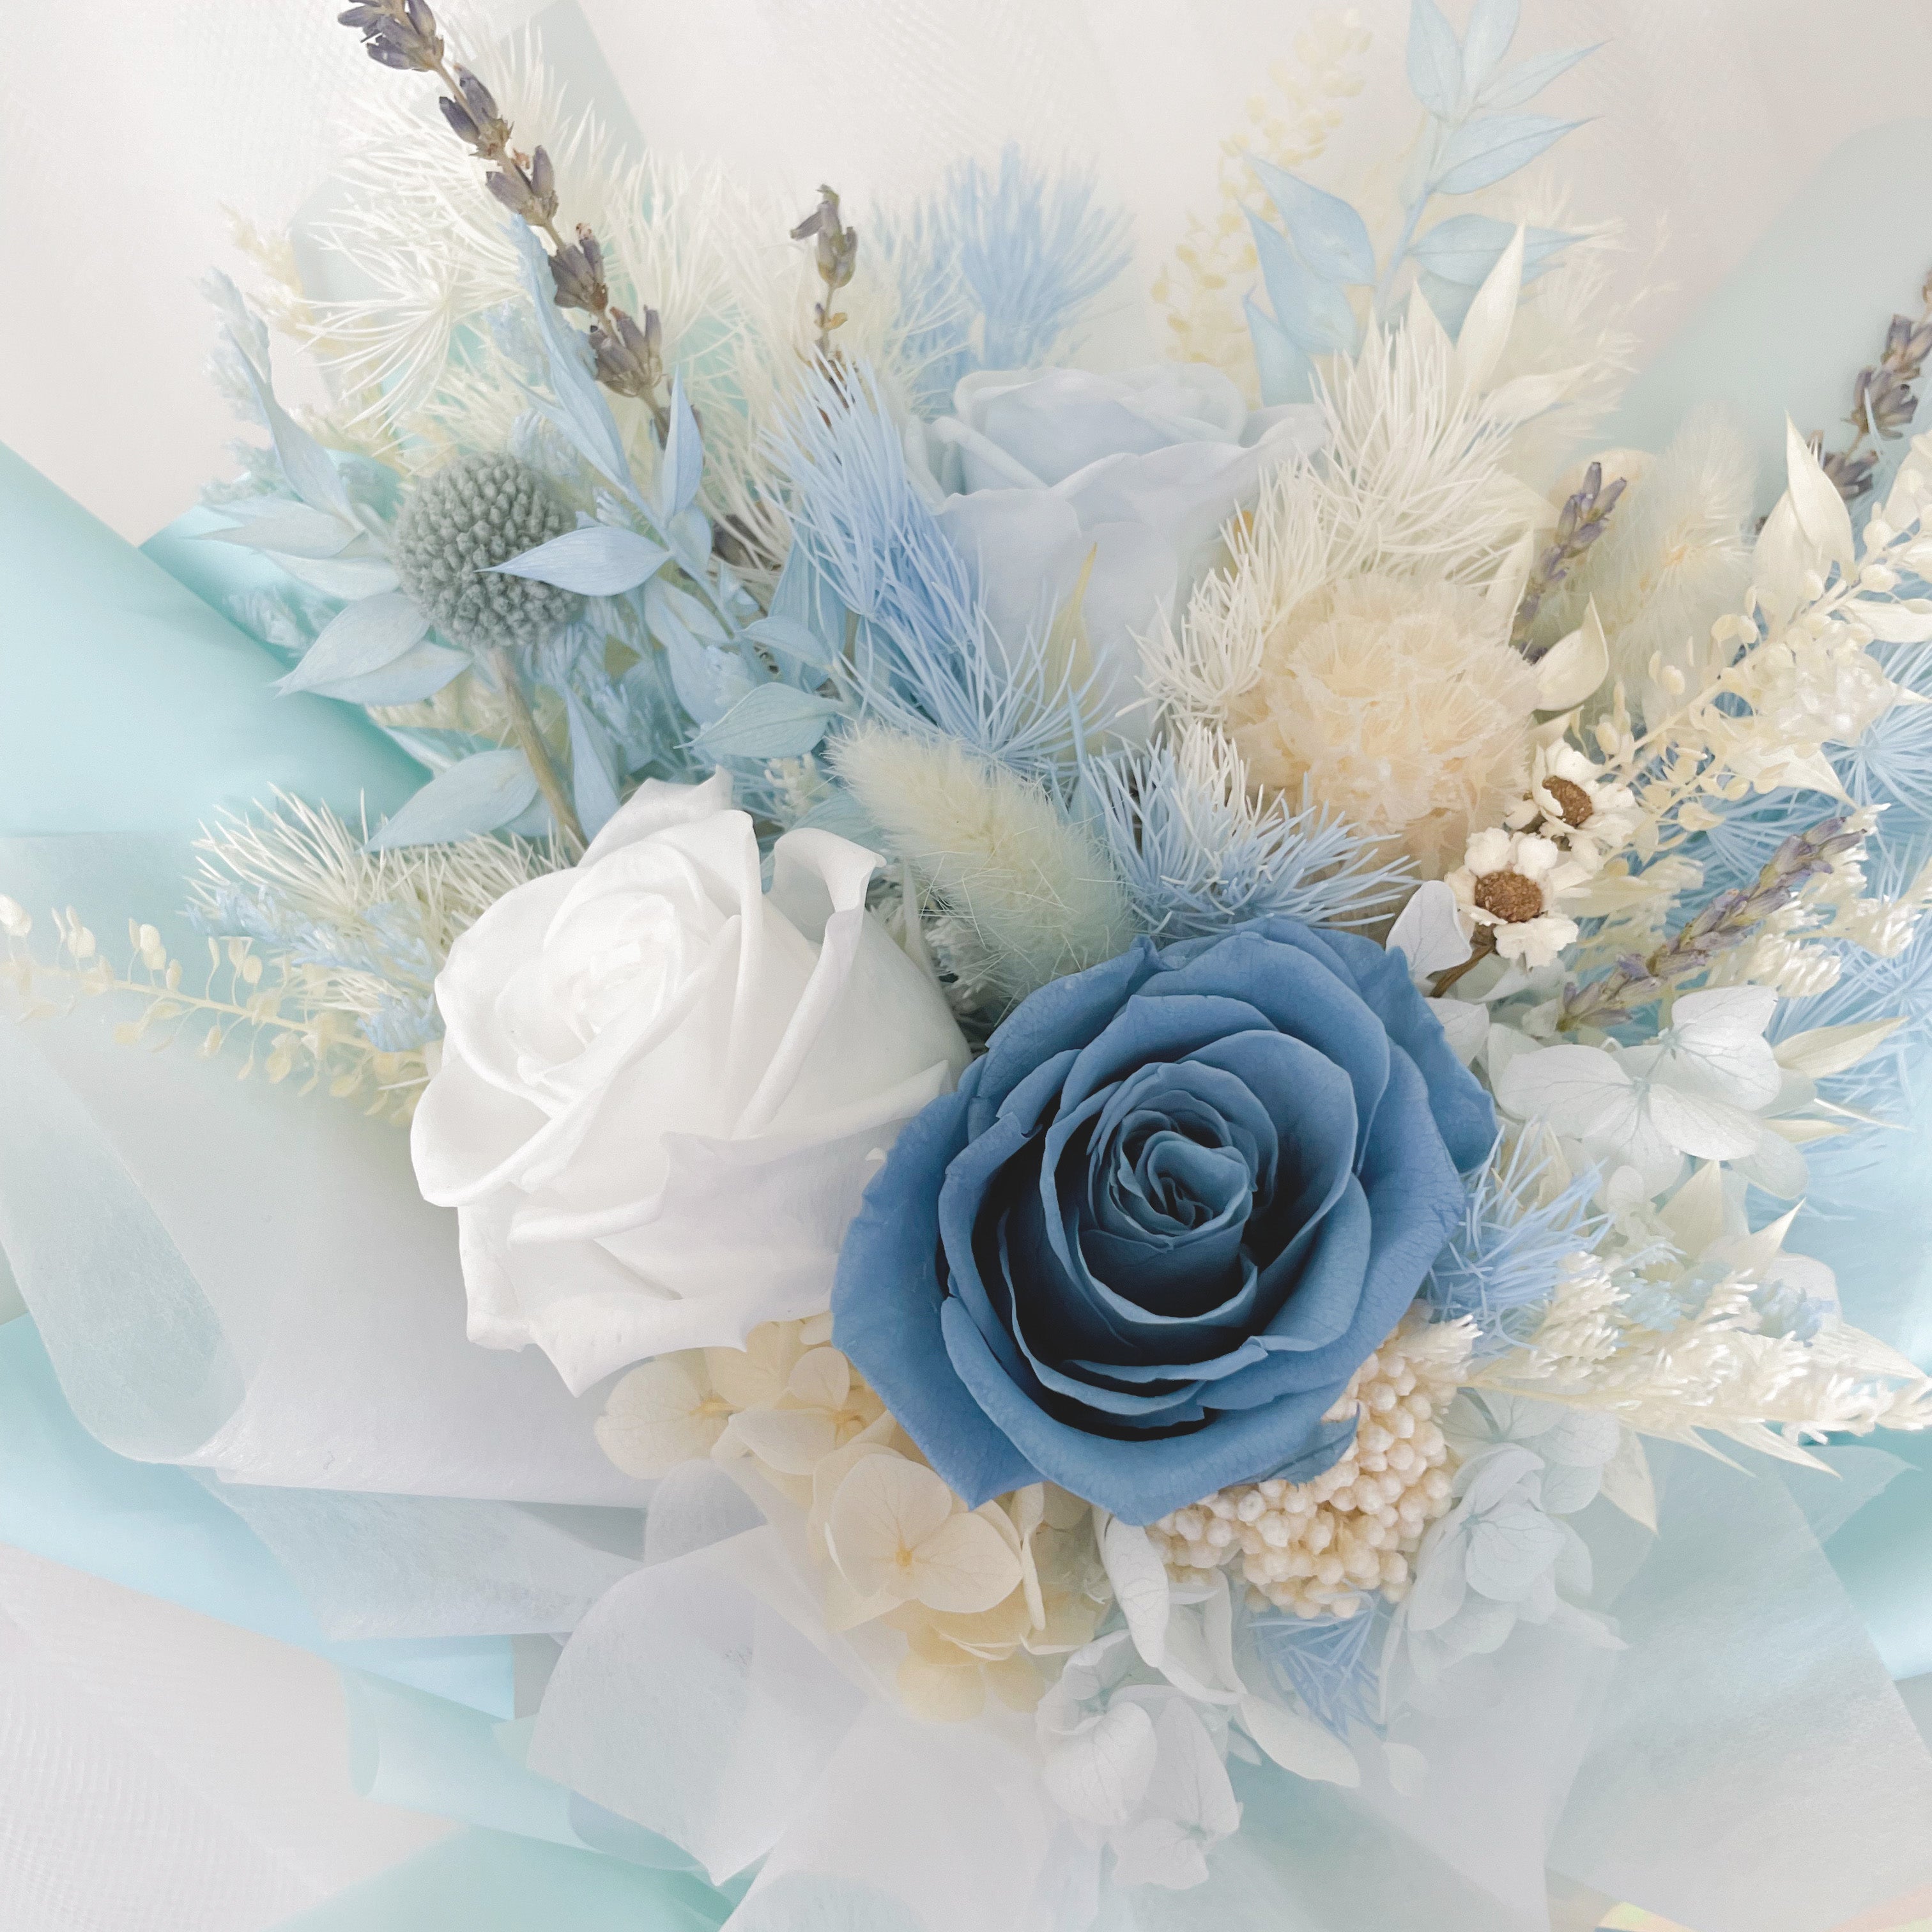 Preserved Flower Bouquet - 3 Stalks Roses (Dusty Blue, Sky Blue, White)